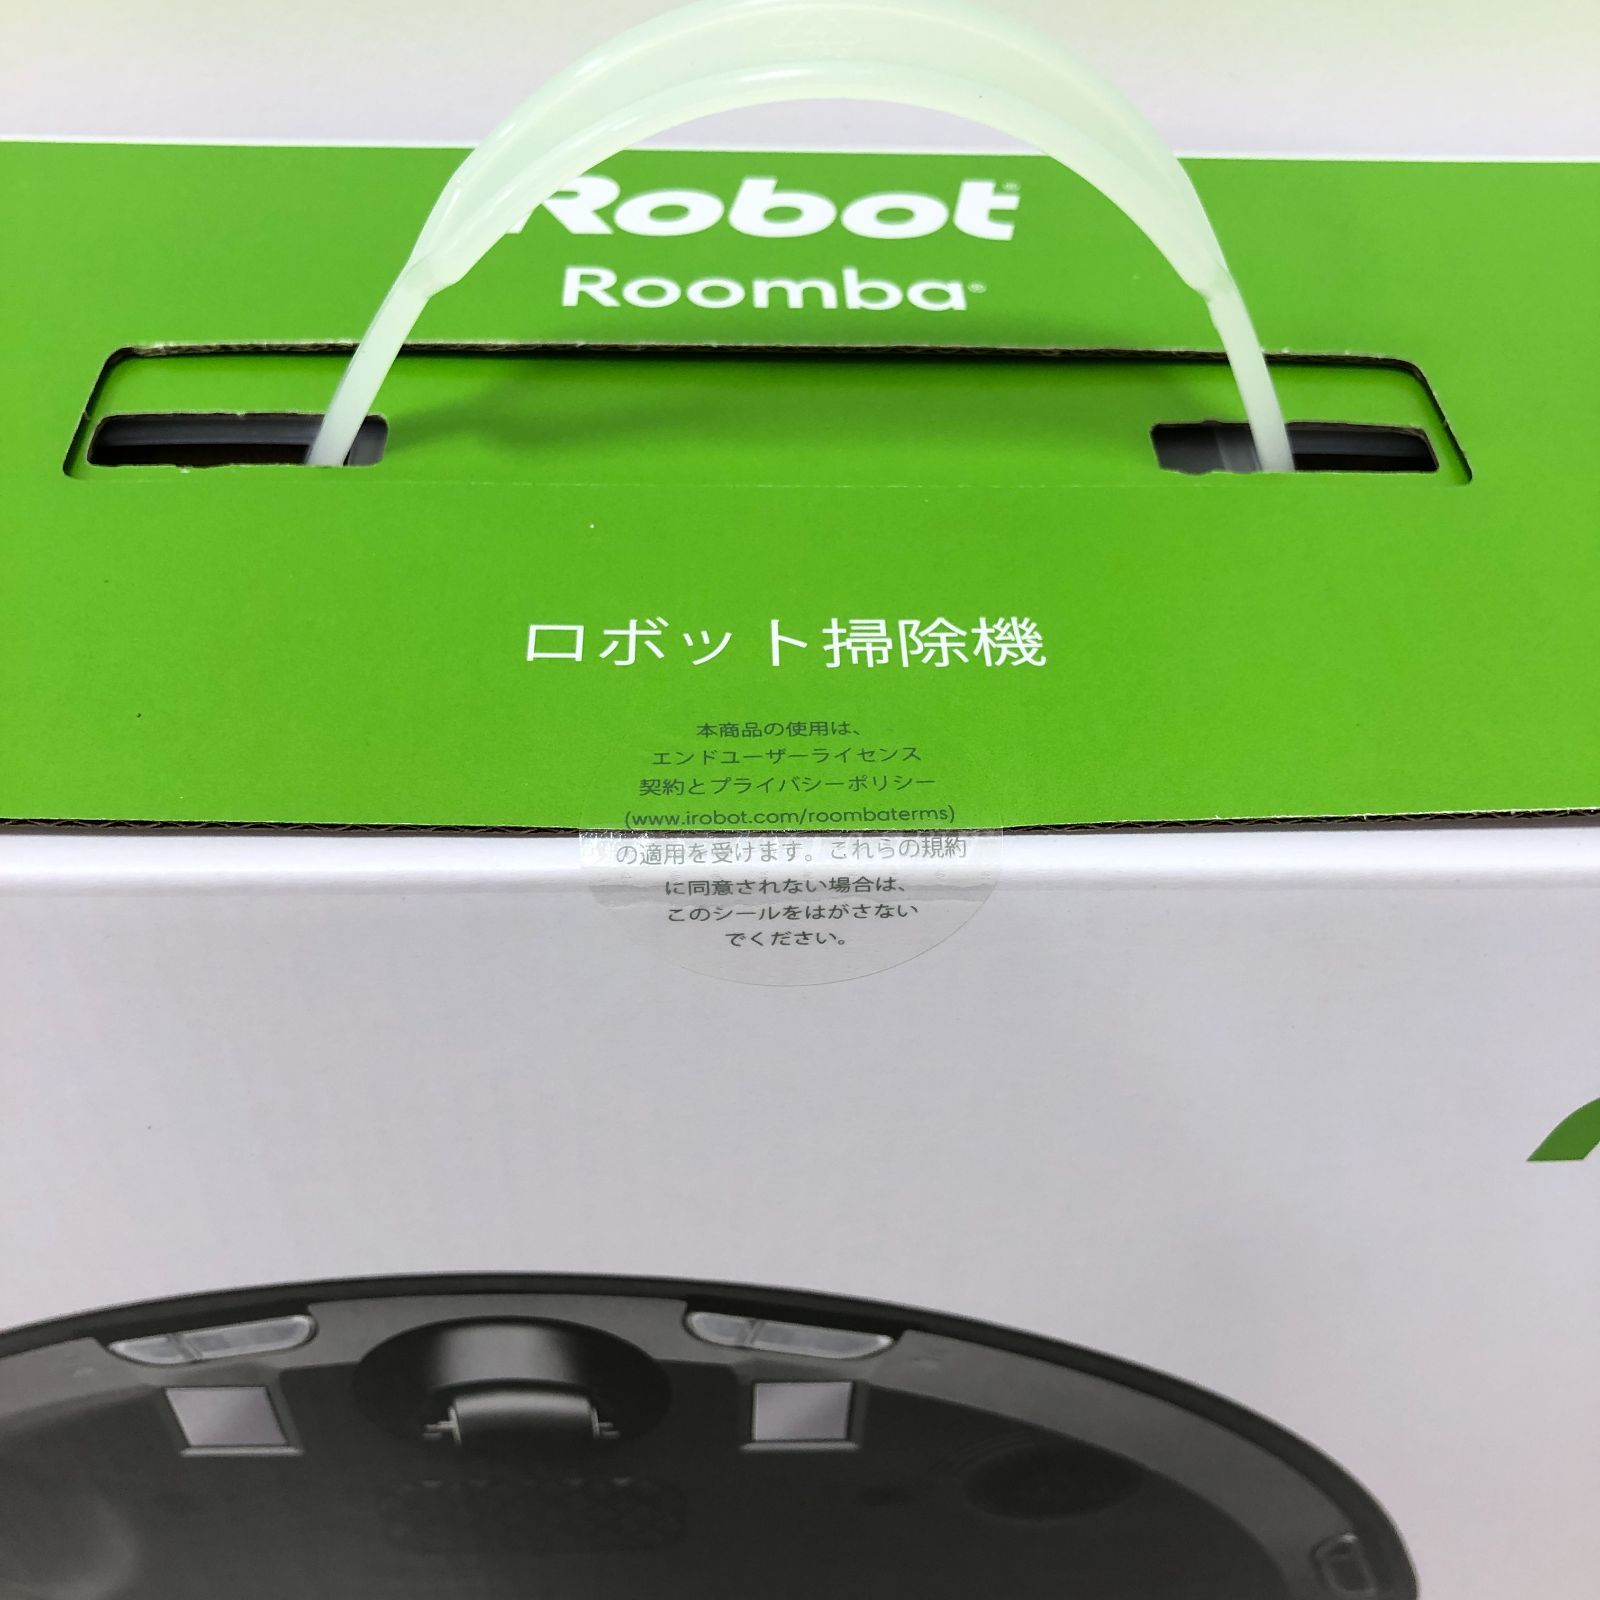 07m0845 未開封品 ルンバ j7 iRobot ロボット掃除機 Roomba j715860 アイロボット 高性能カメラ コード類回避  Alexa対応